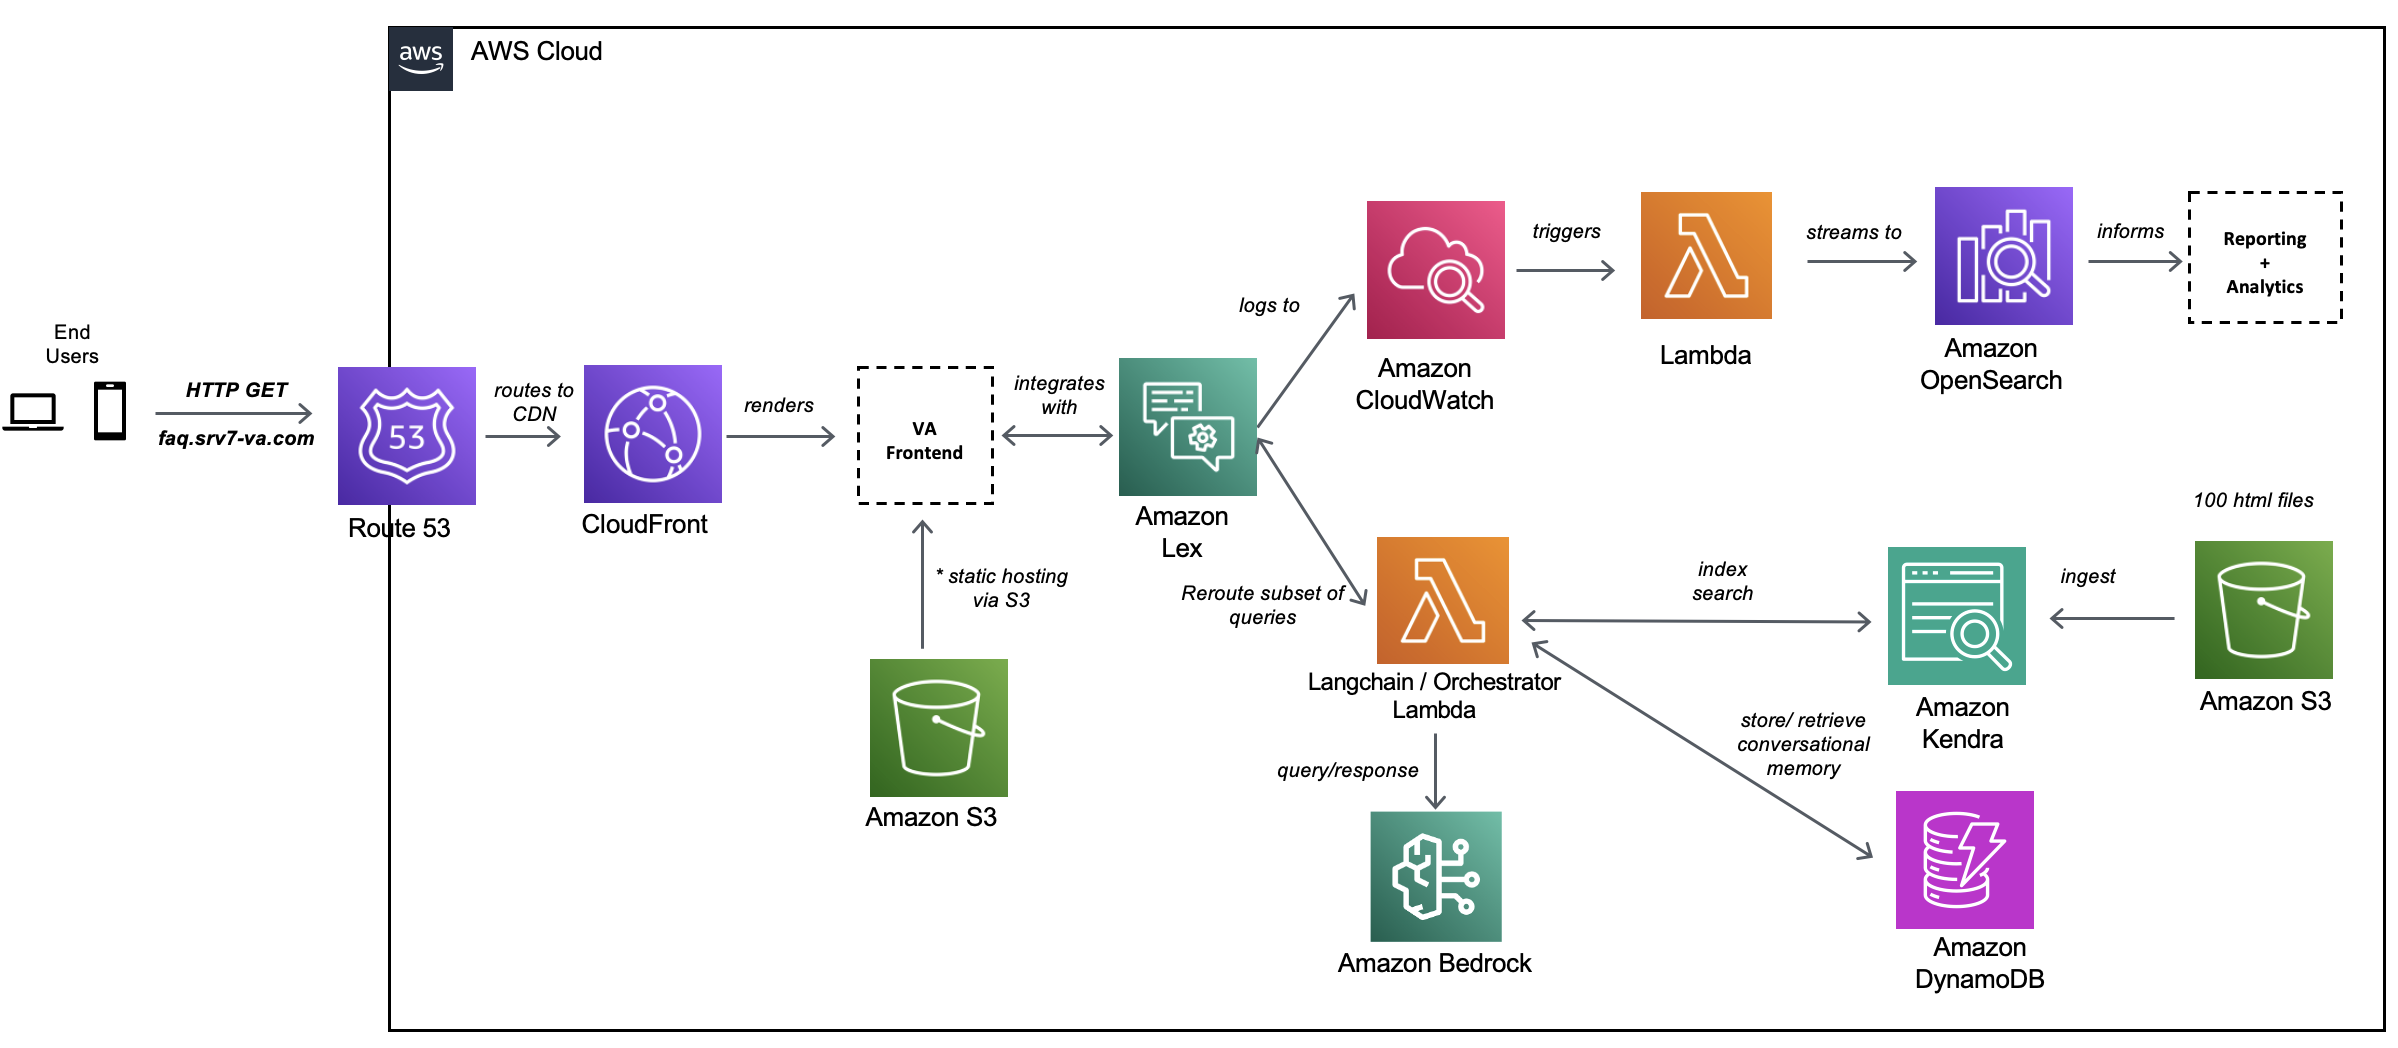 Accenture creates a Knowledge Assist solution using generative AI serv …